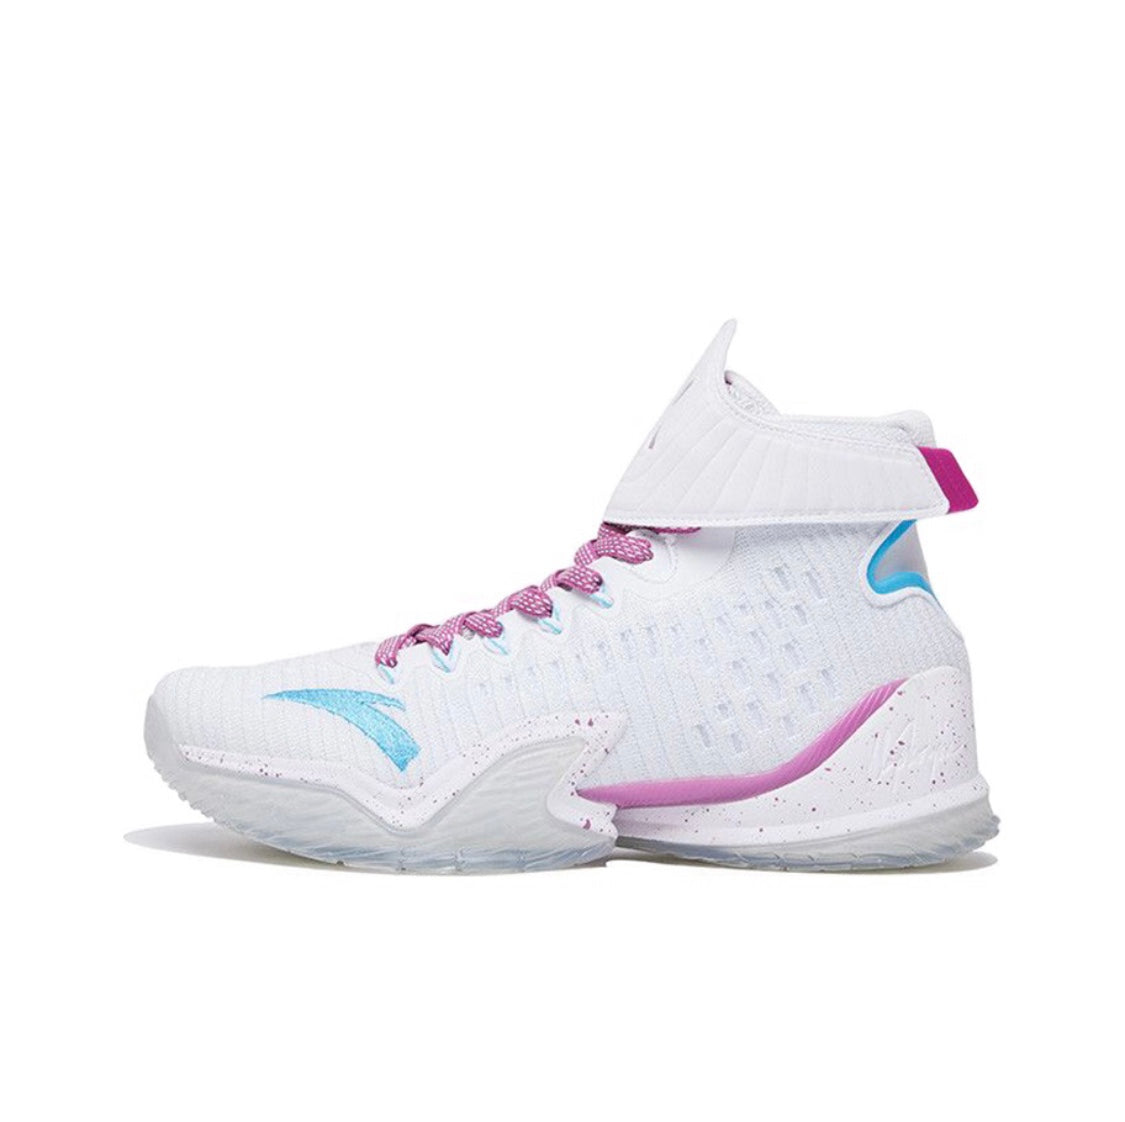 Anta Men's Klay Thompson Kt3 White/Blue/Pink Basketball Shoes